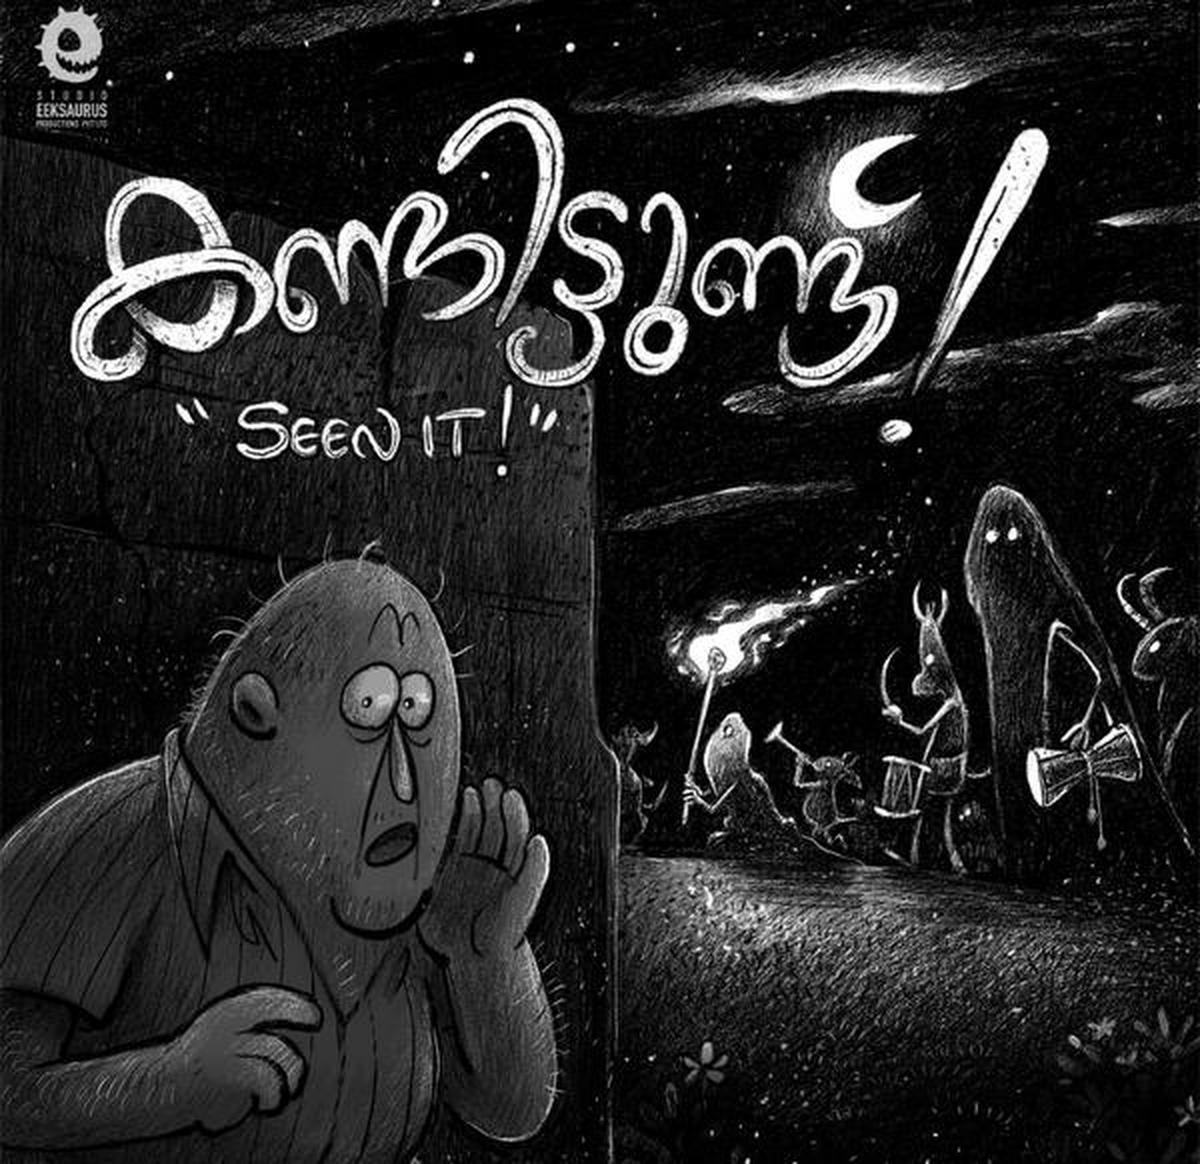 Malayalam animated short film 'Kandittund' gives life to some ghouls of  Malayalam folklore - The Hindu